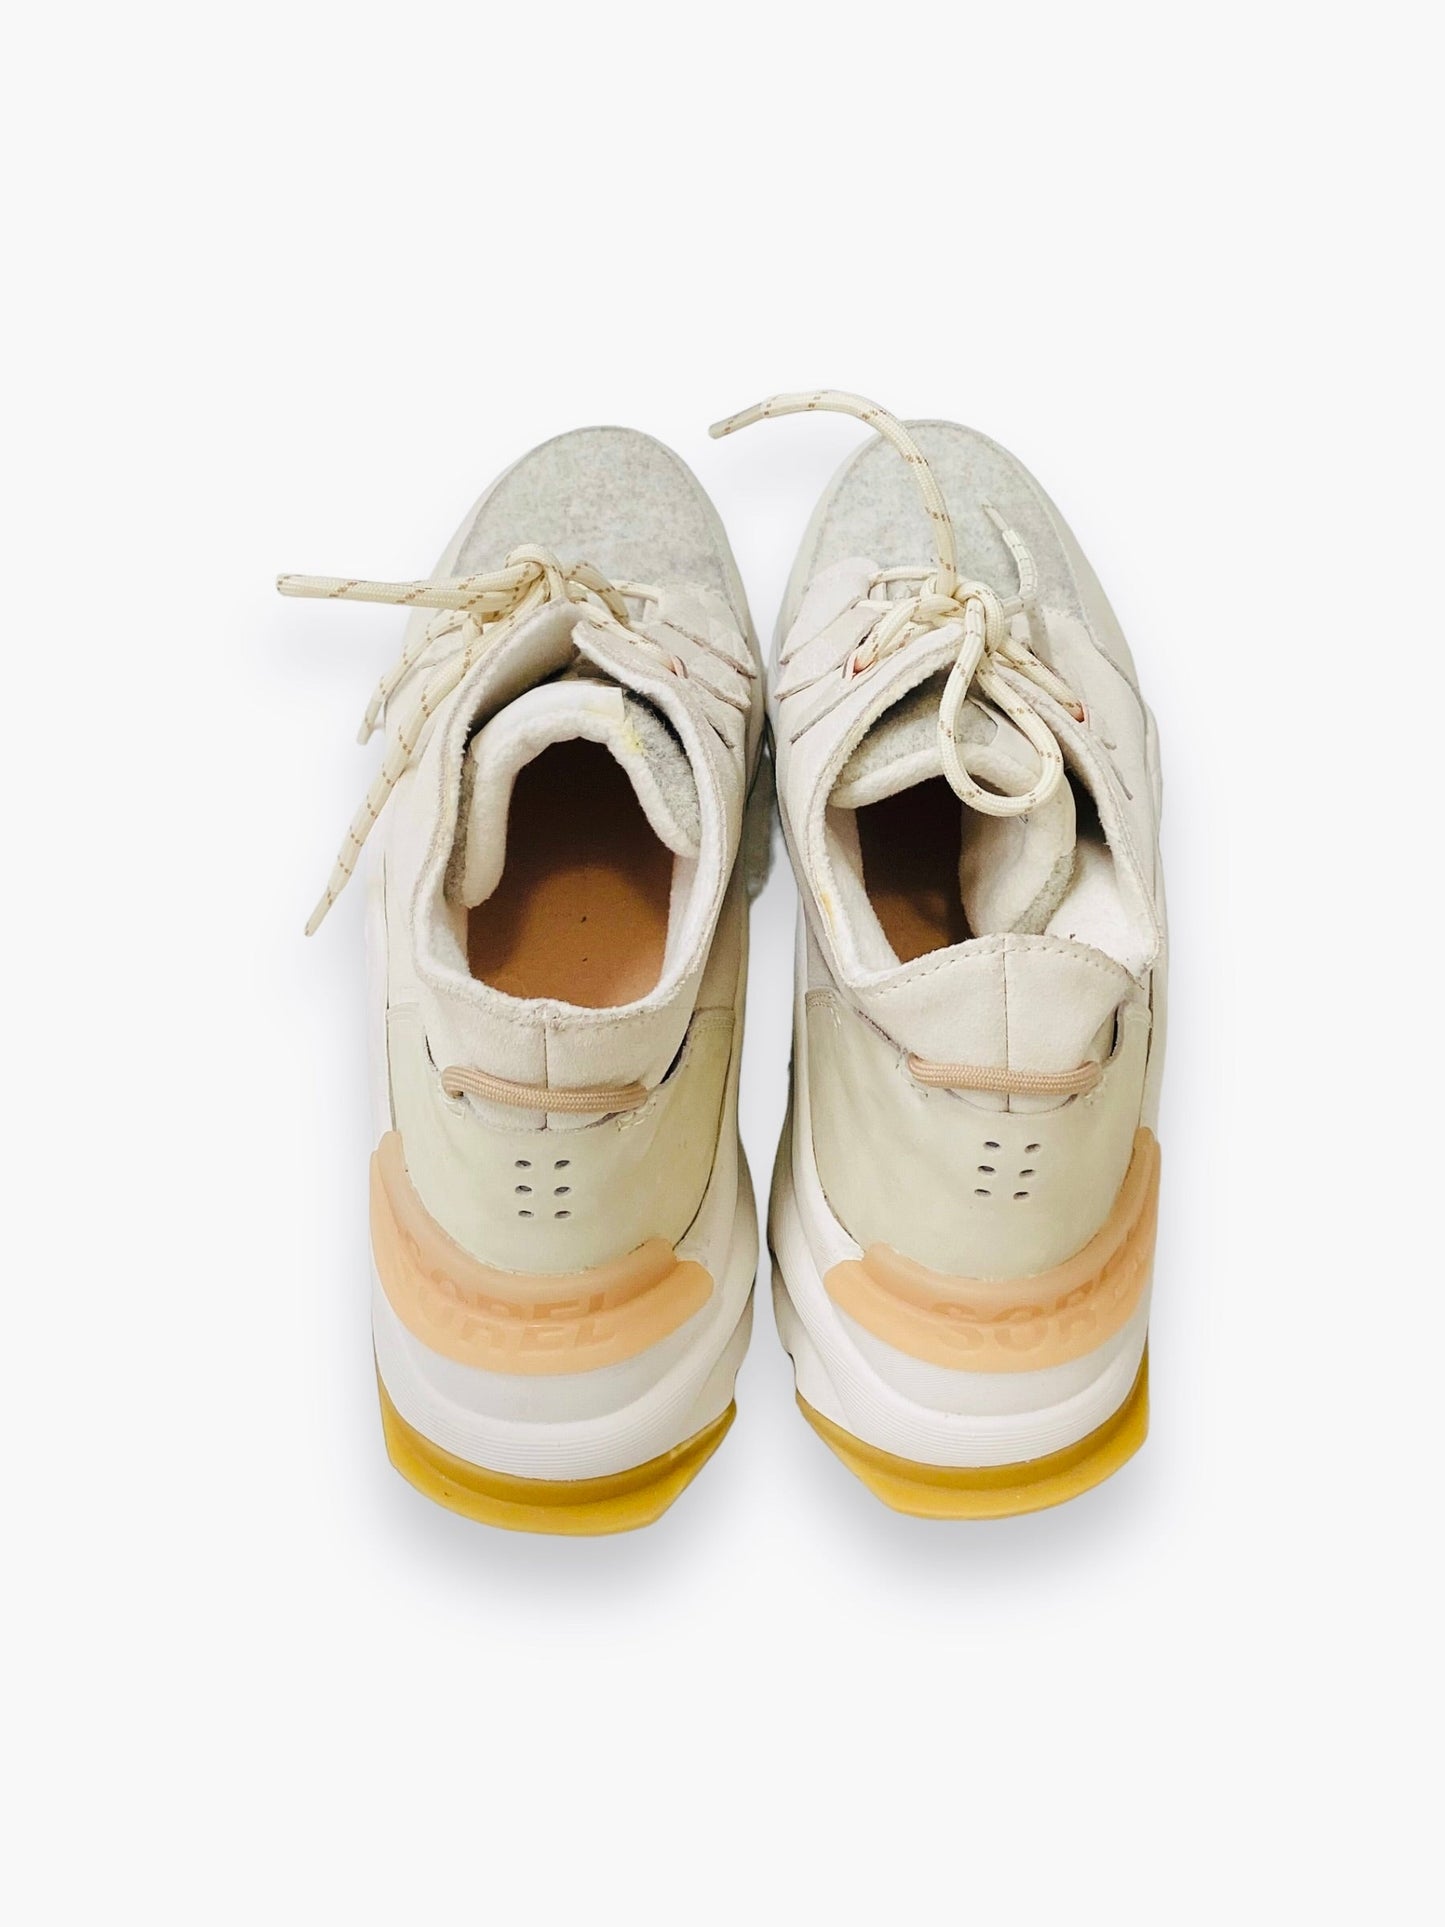 Cream Shoes Athletic Sorel, Size 11